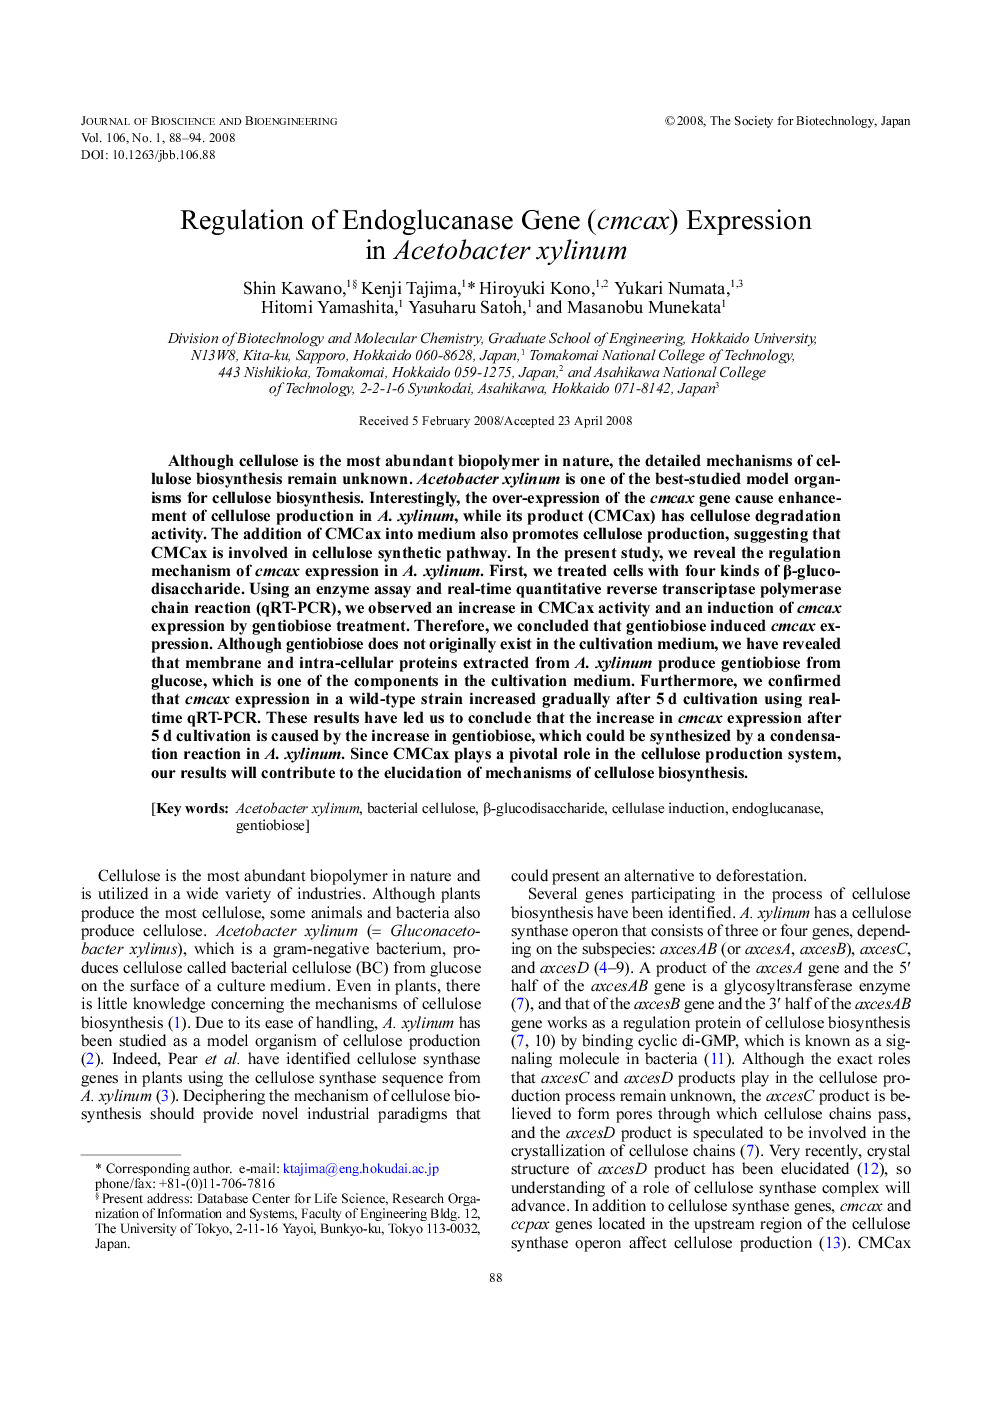 Regulation of endoglucanase gene (cmcax) expression in Acetobacter xylinum